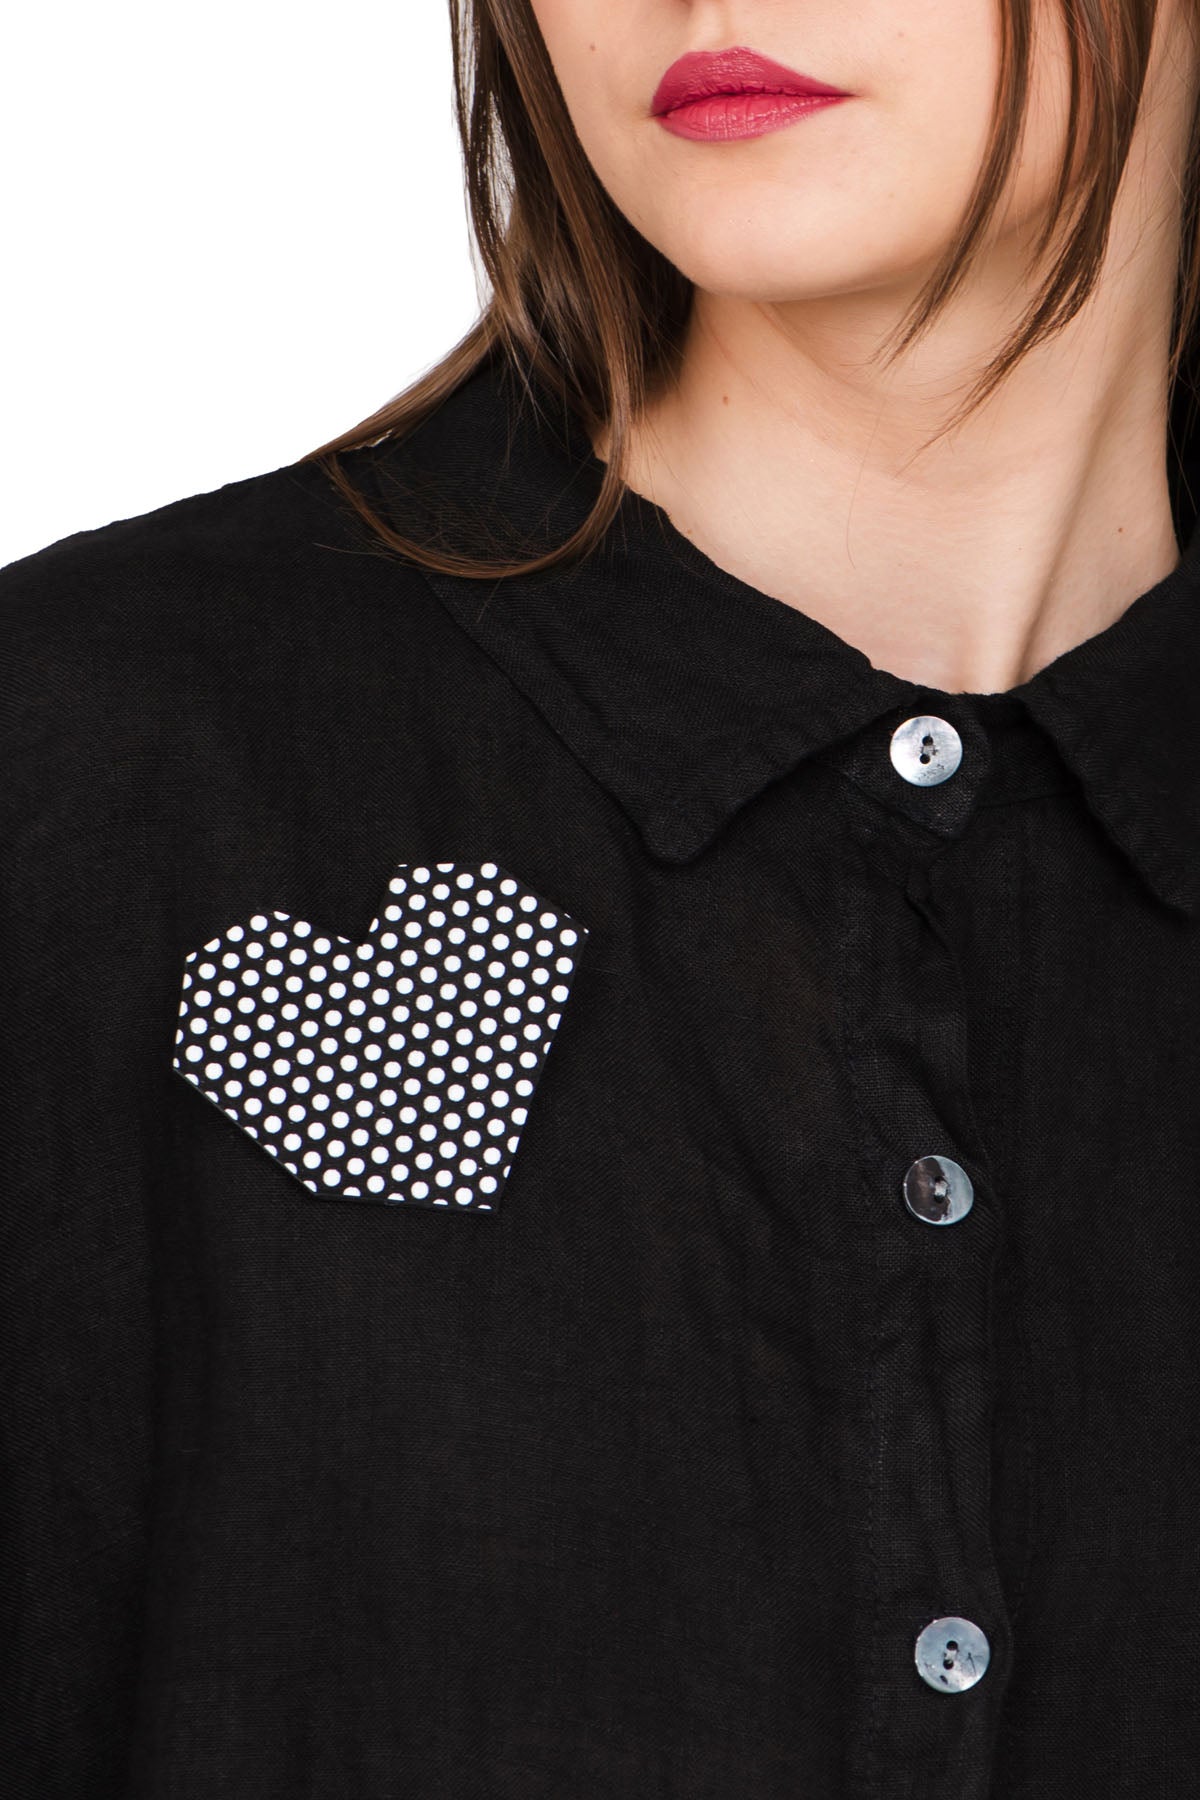 Ken Design Round Heart Pin - Black and White Polka Dot